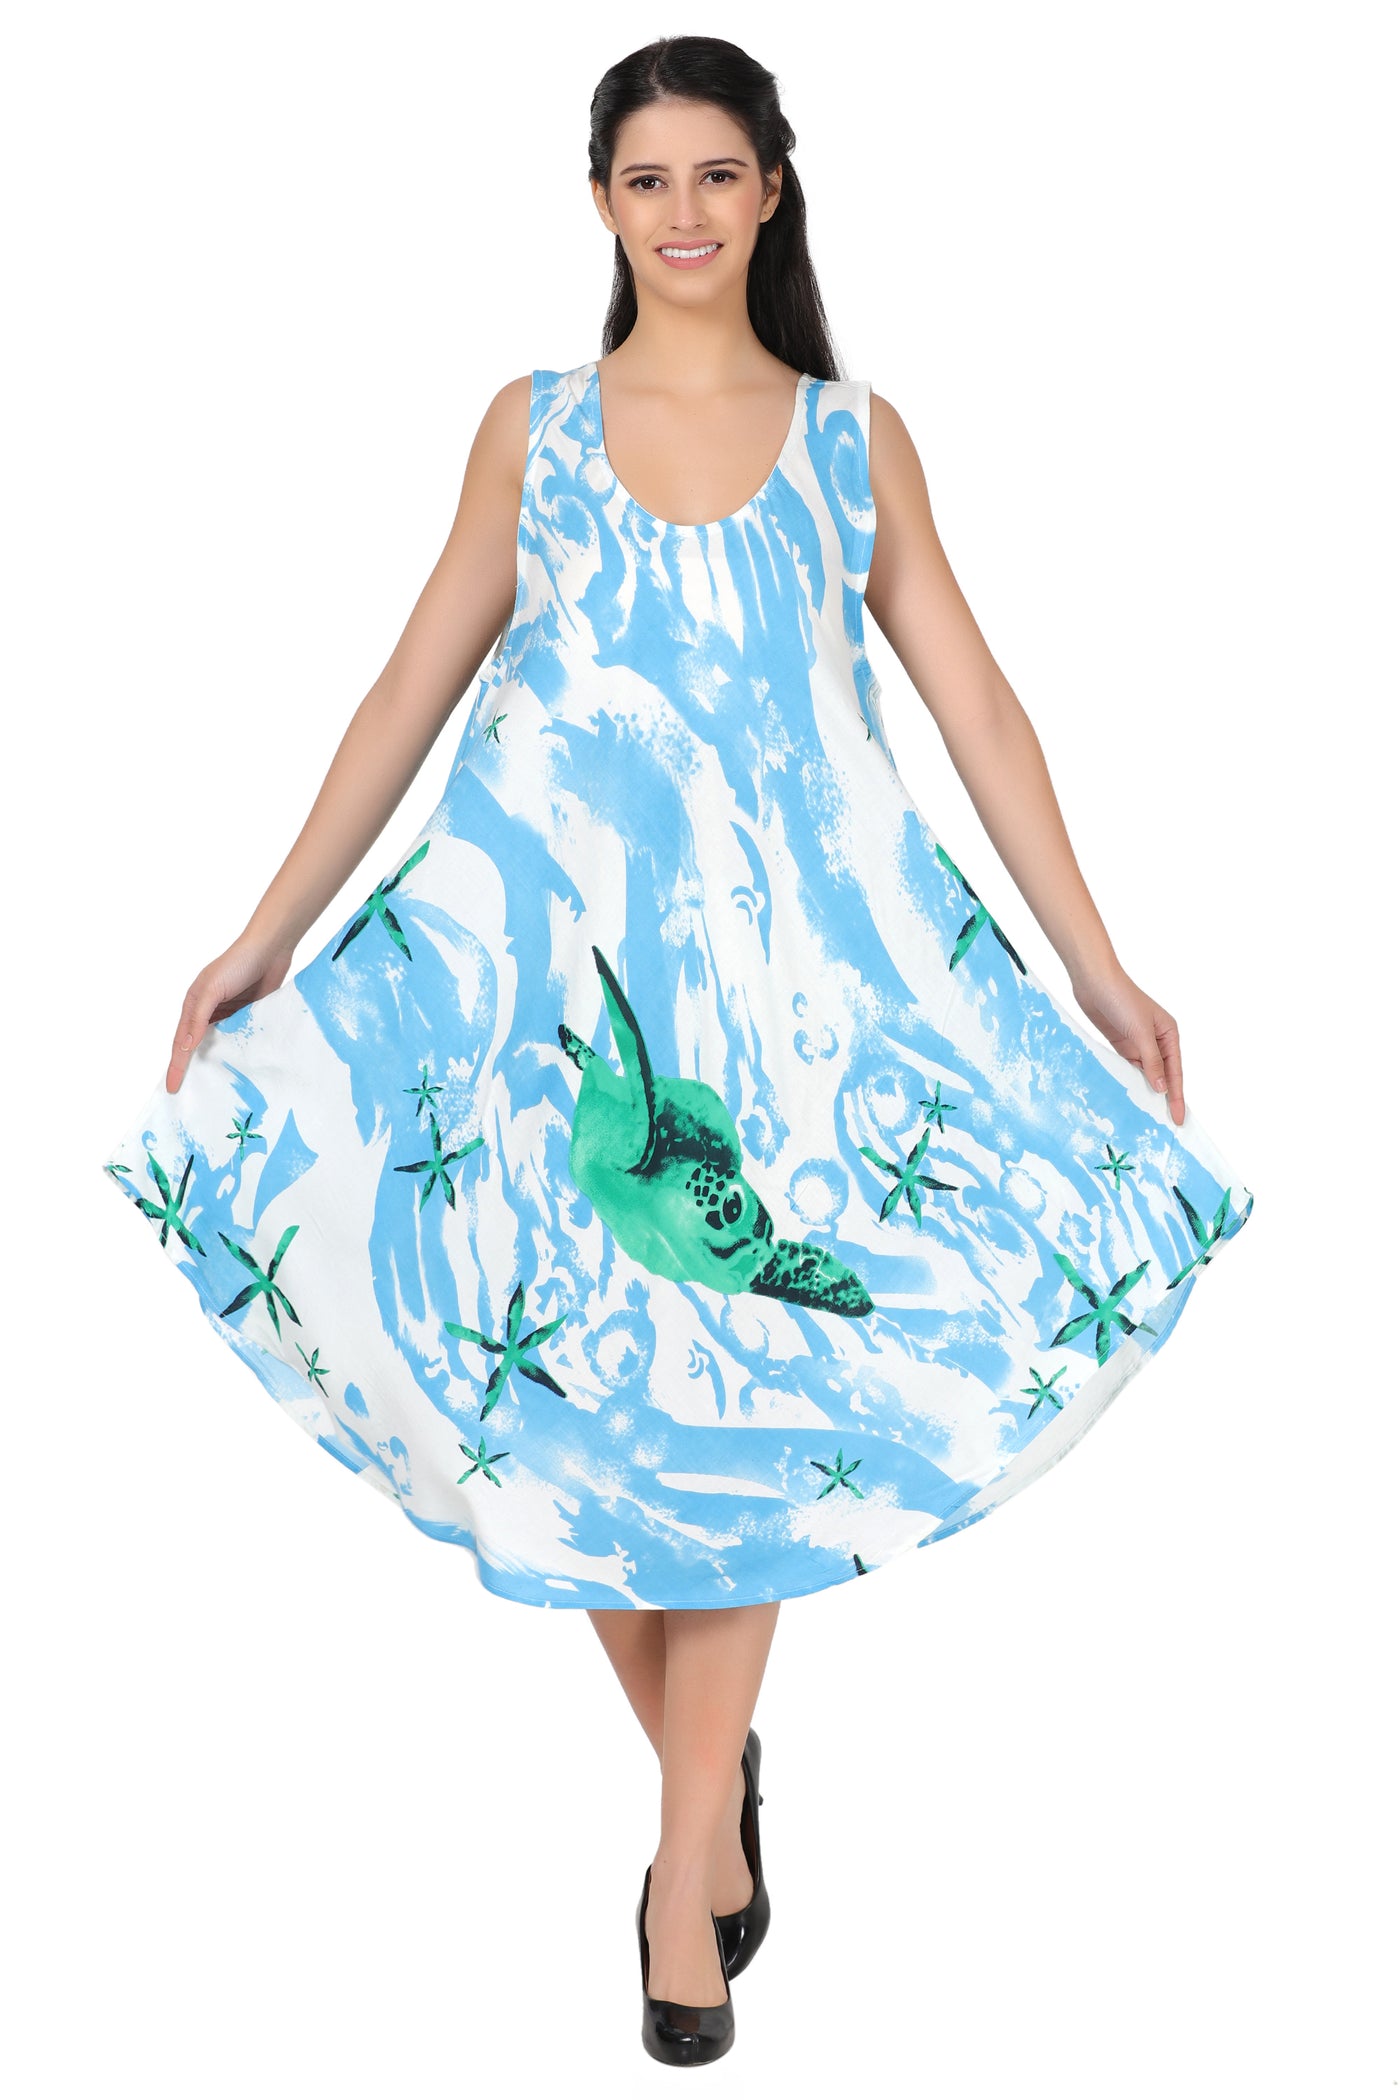 Turtle Print Beach Dress 422125